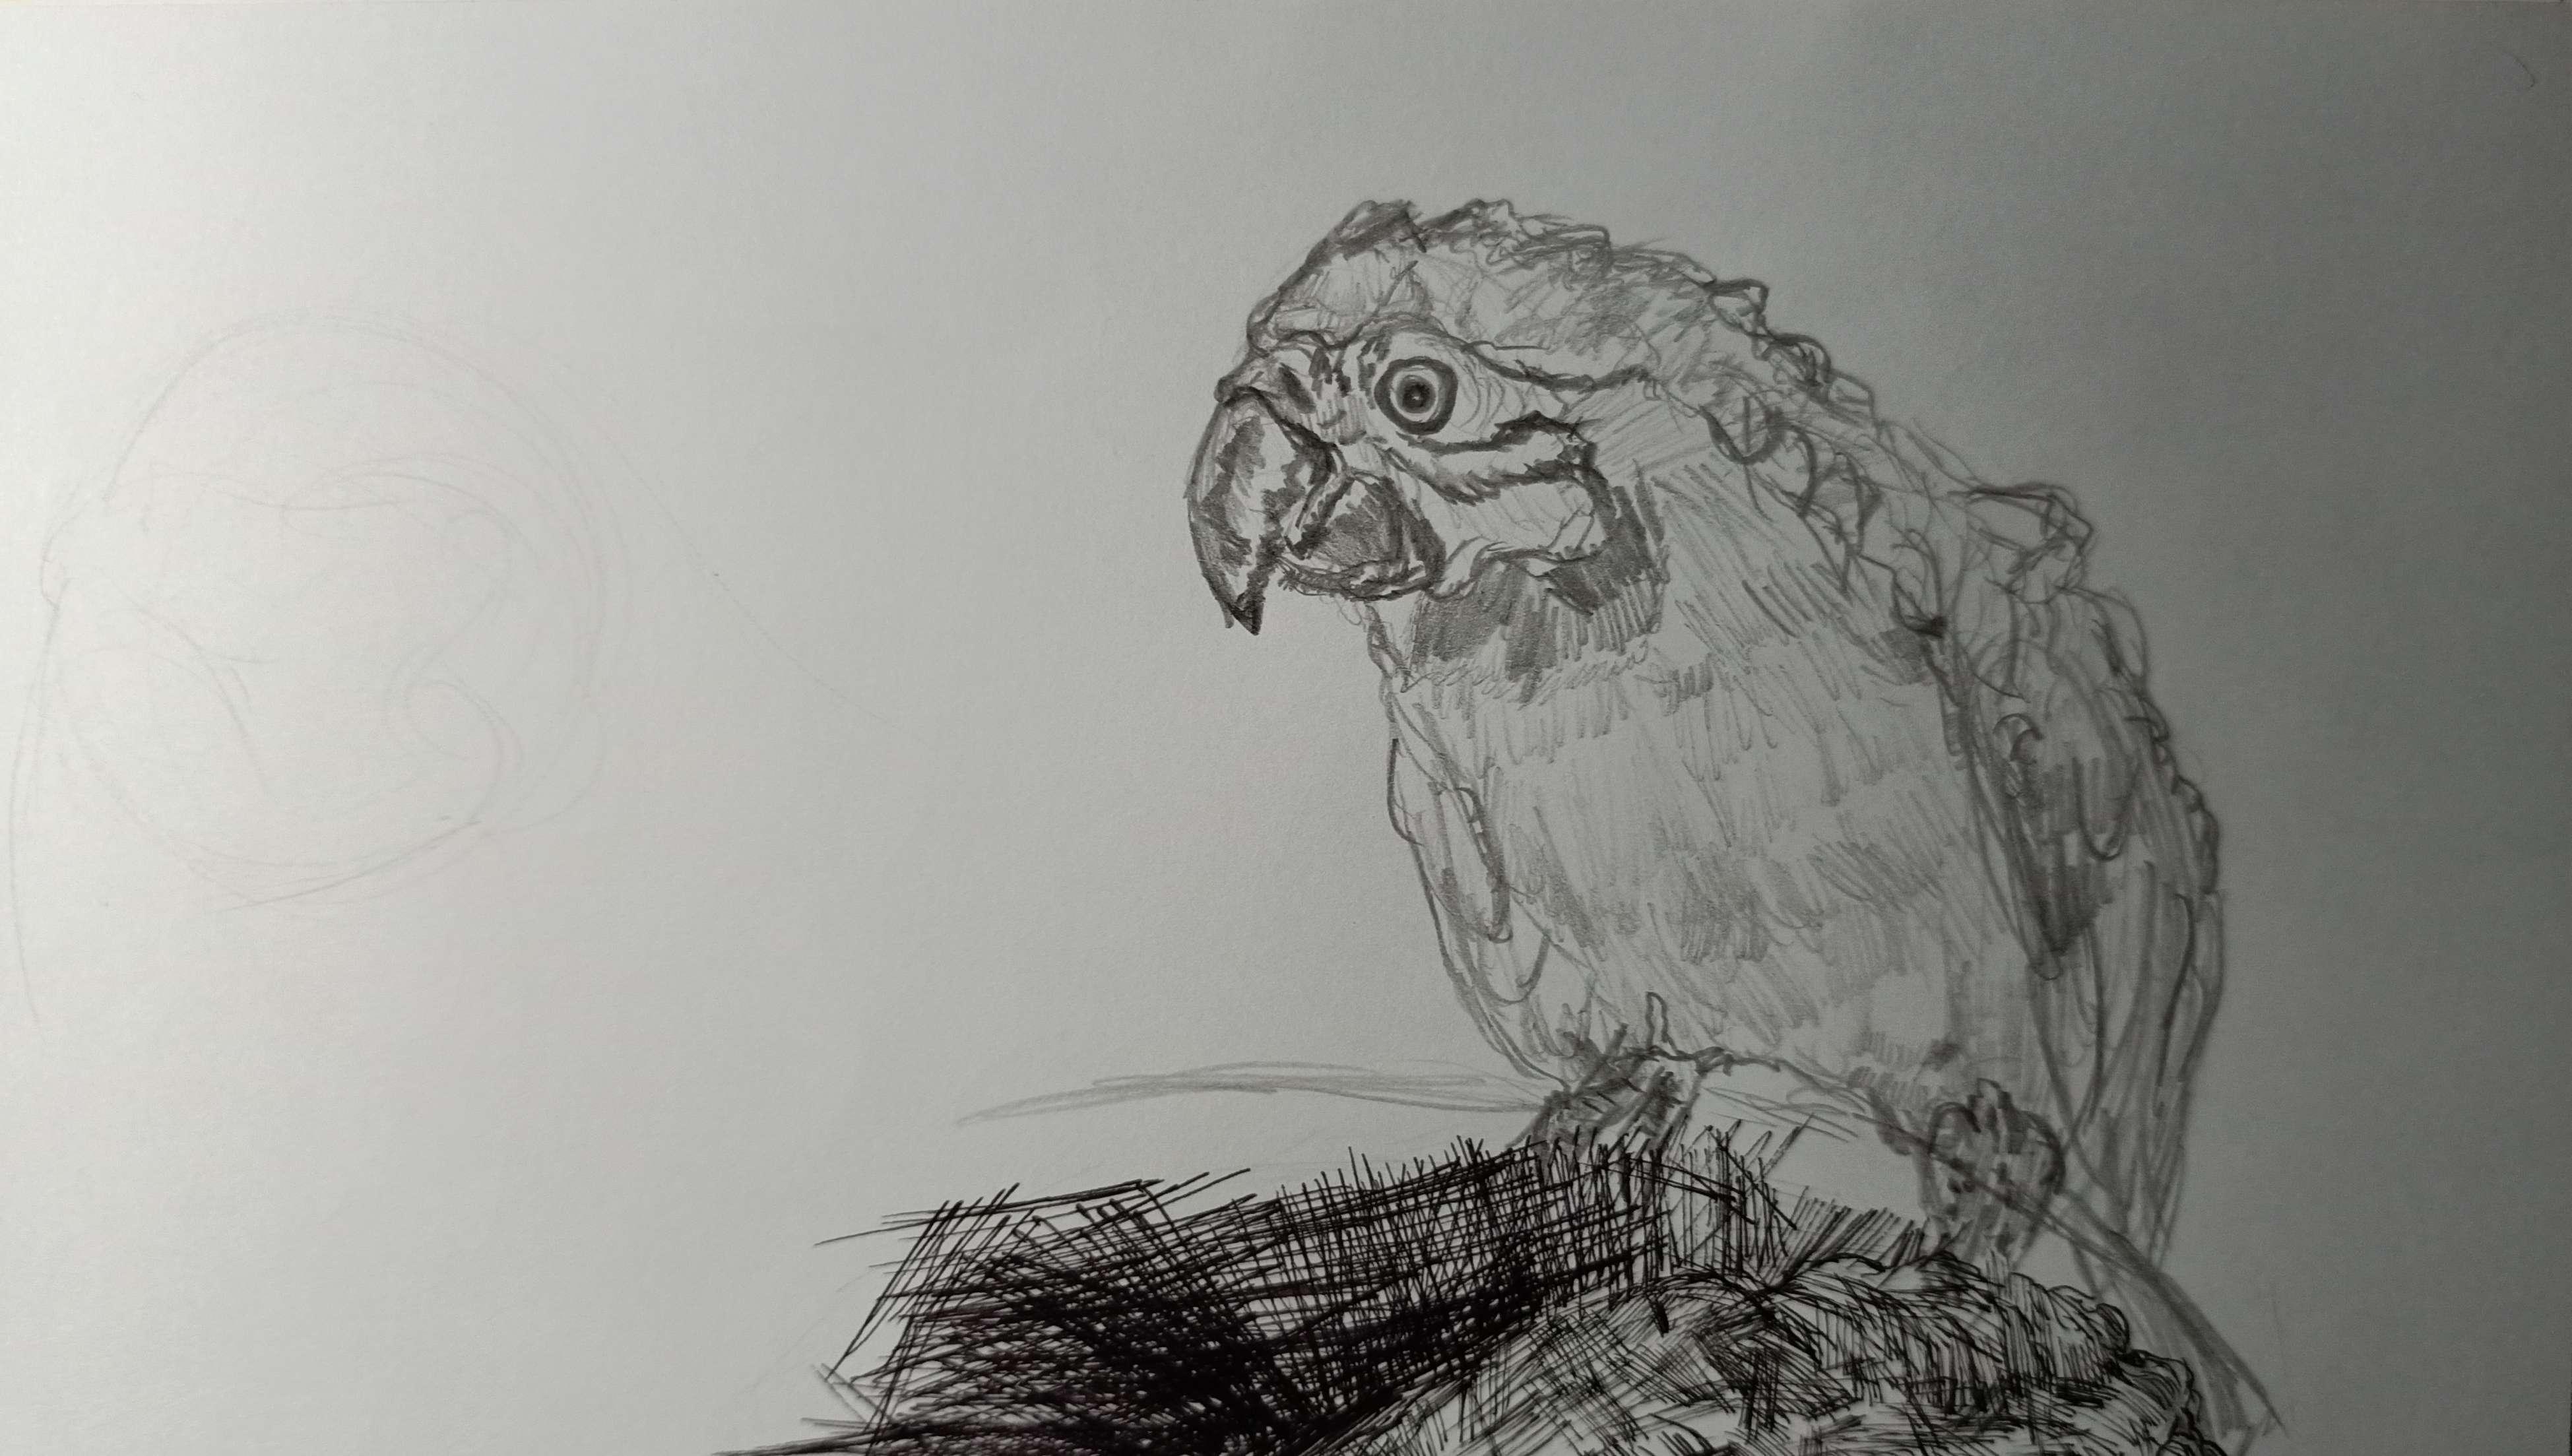 parrot pencil drawing